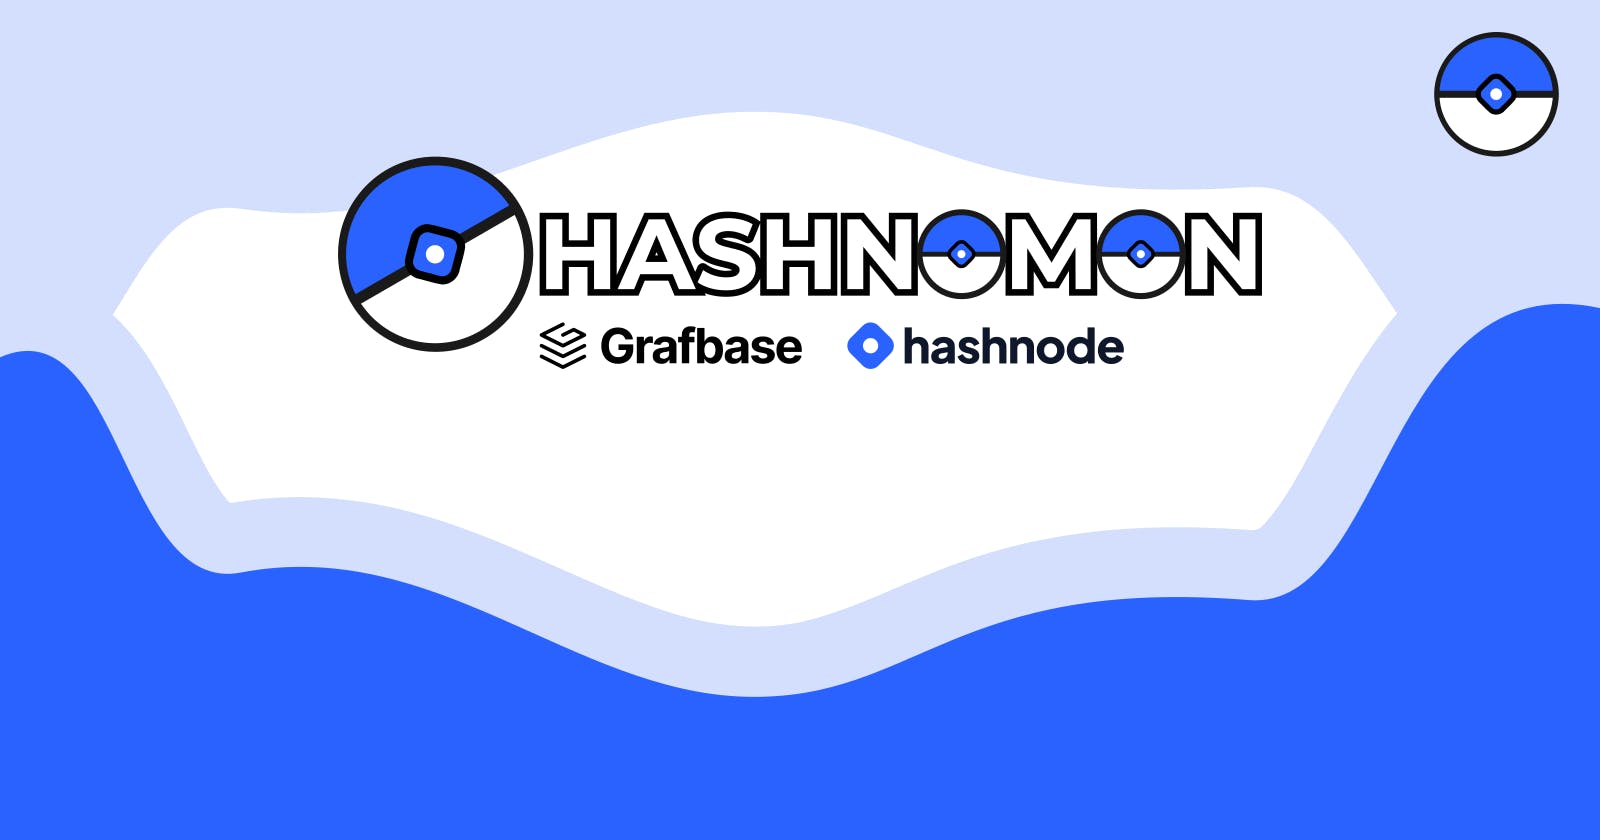 Hashnomon: Battle and Collect Hashnode Developers